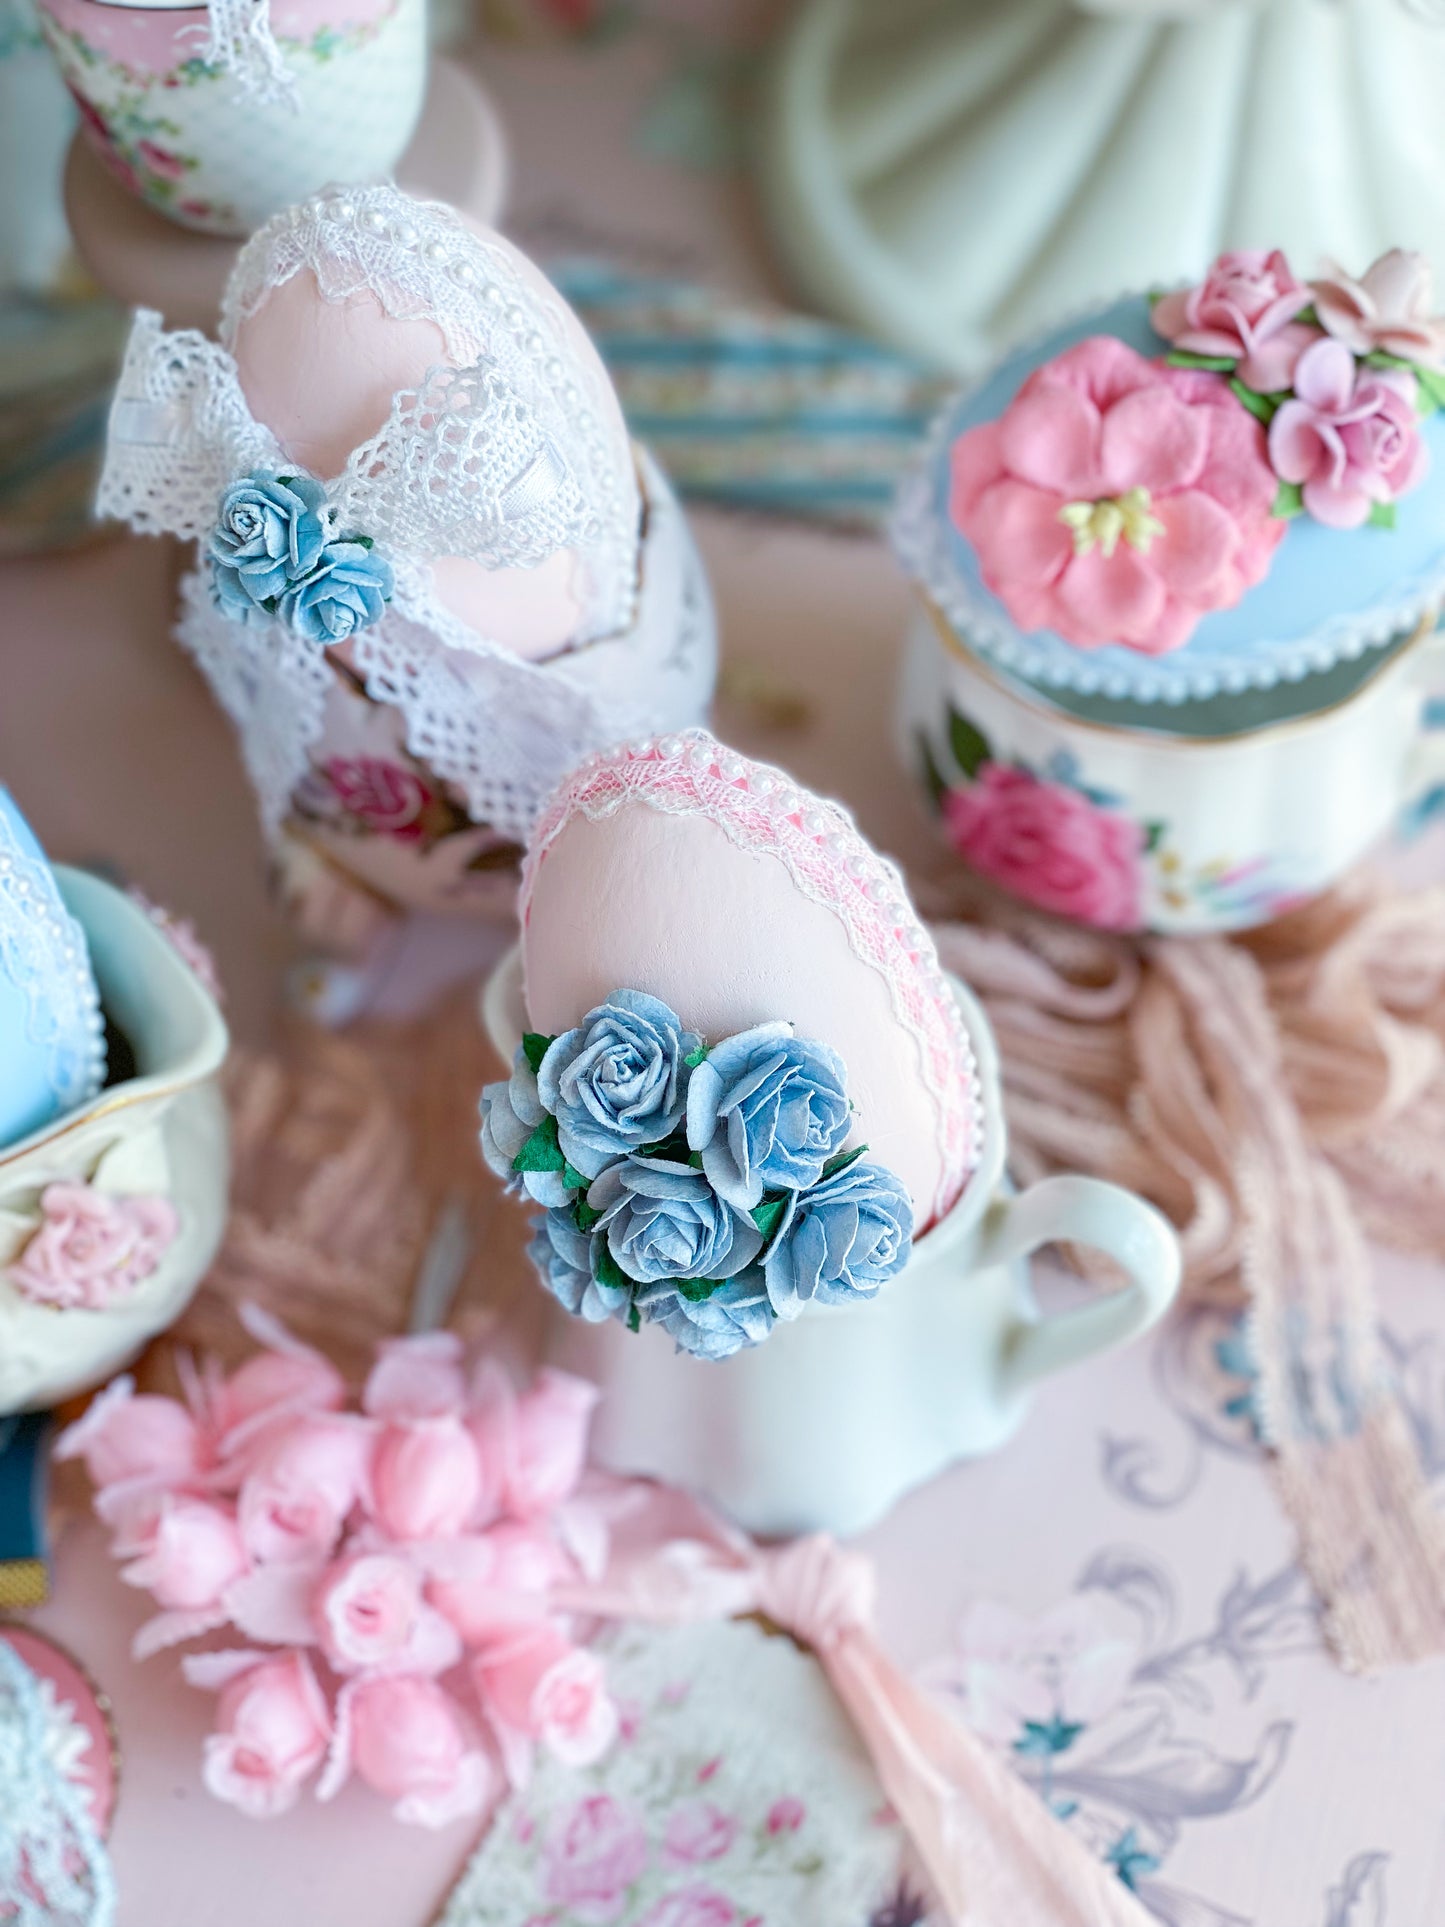 Set of 12 Handmade Pastel Pink and Blue Floral Easter Egg Bowl Sitters